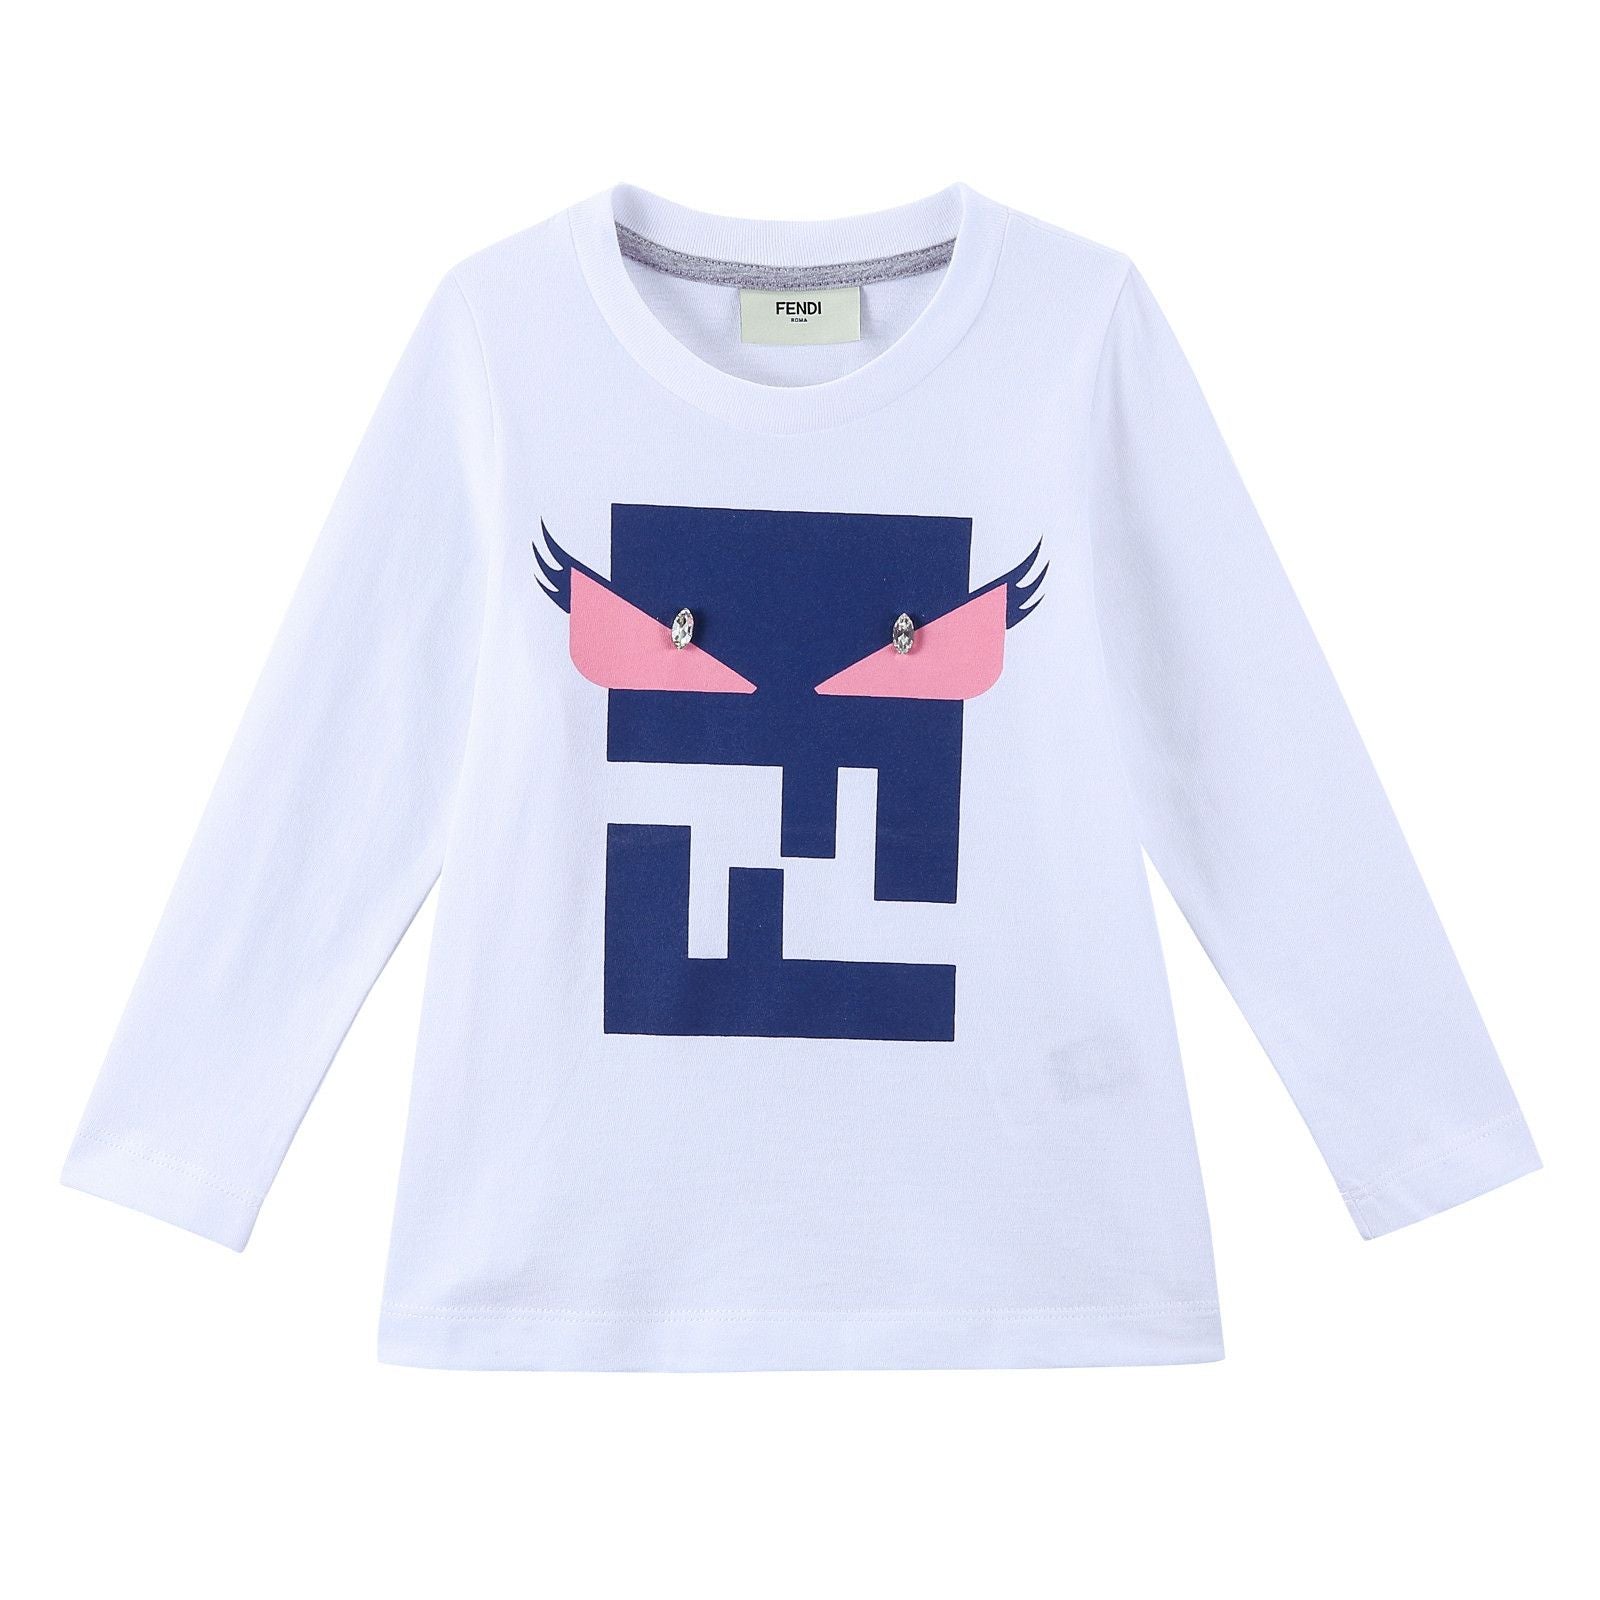 Girls White 'FF Monster' Printed Cotton T-Shirt - CÉMAROSE | Children's Fashion Store - 1